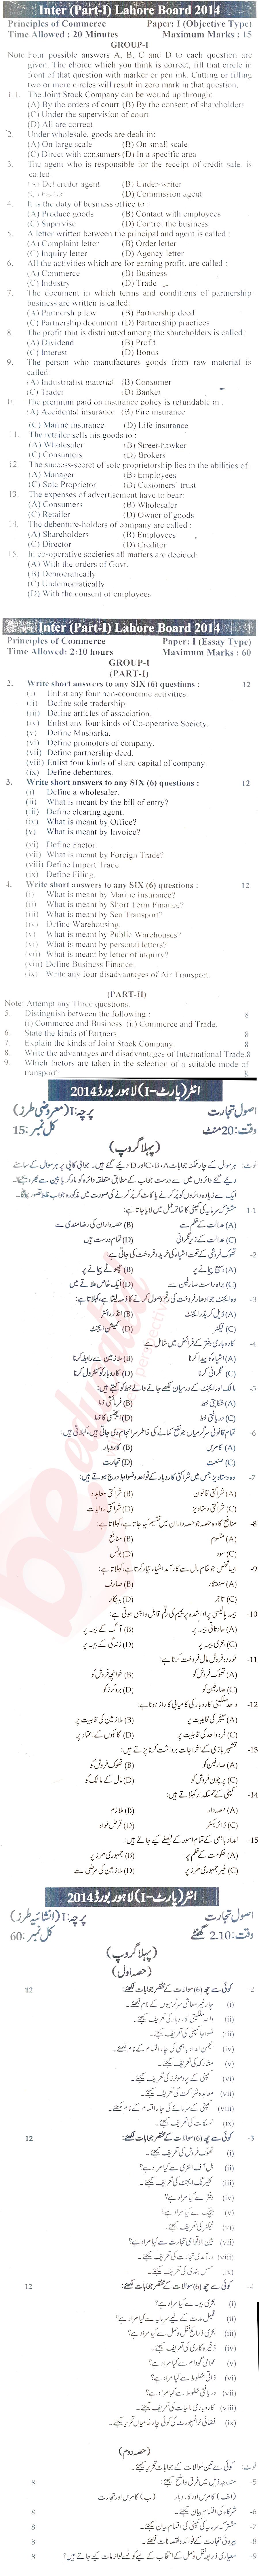 Principles of Commerce ICOM Part 1 Past Paper Group 1 BISE Lahore 2014